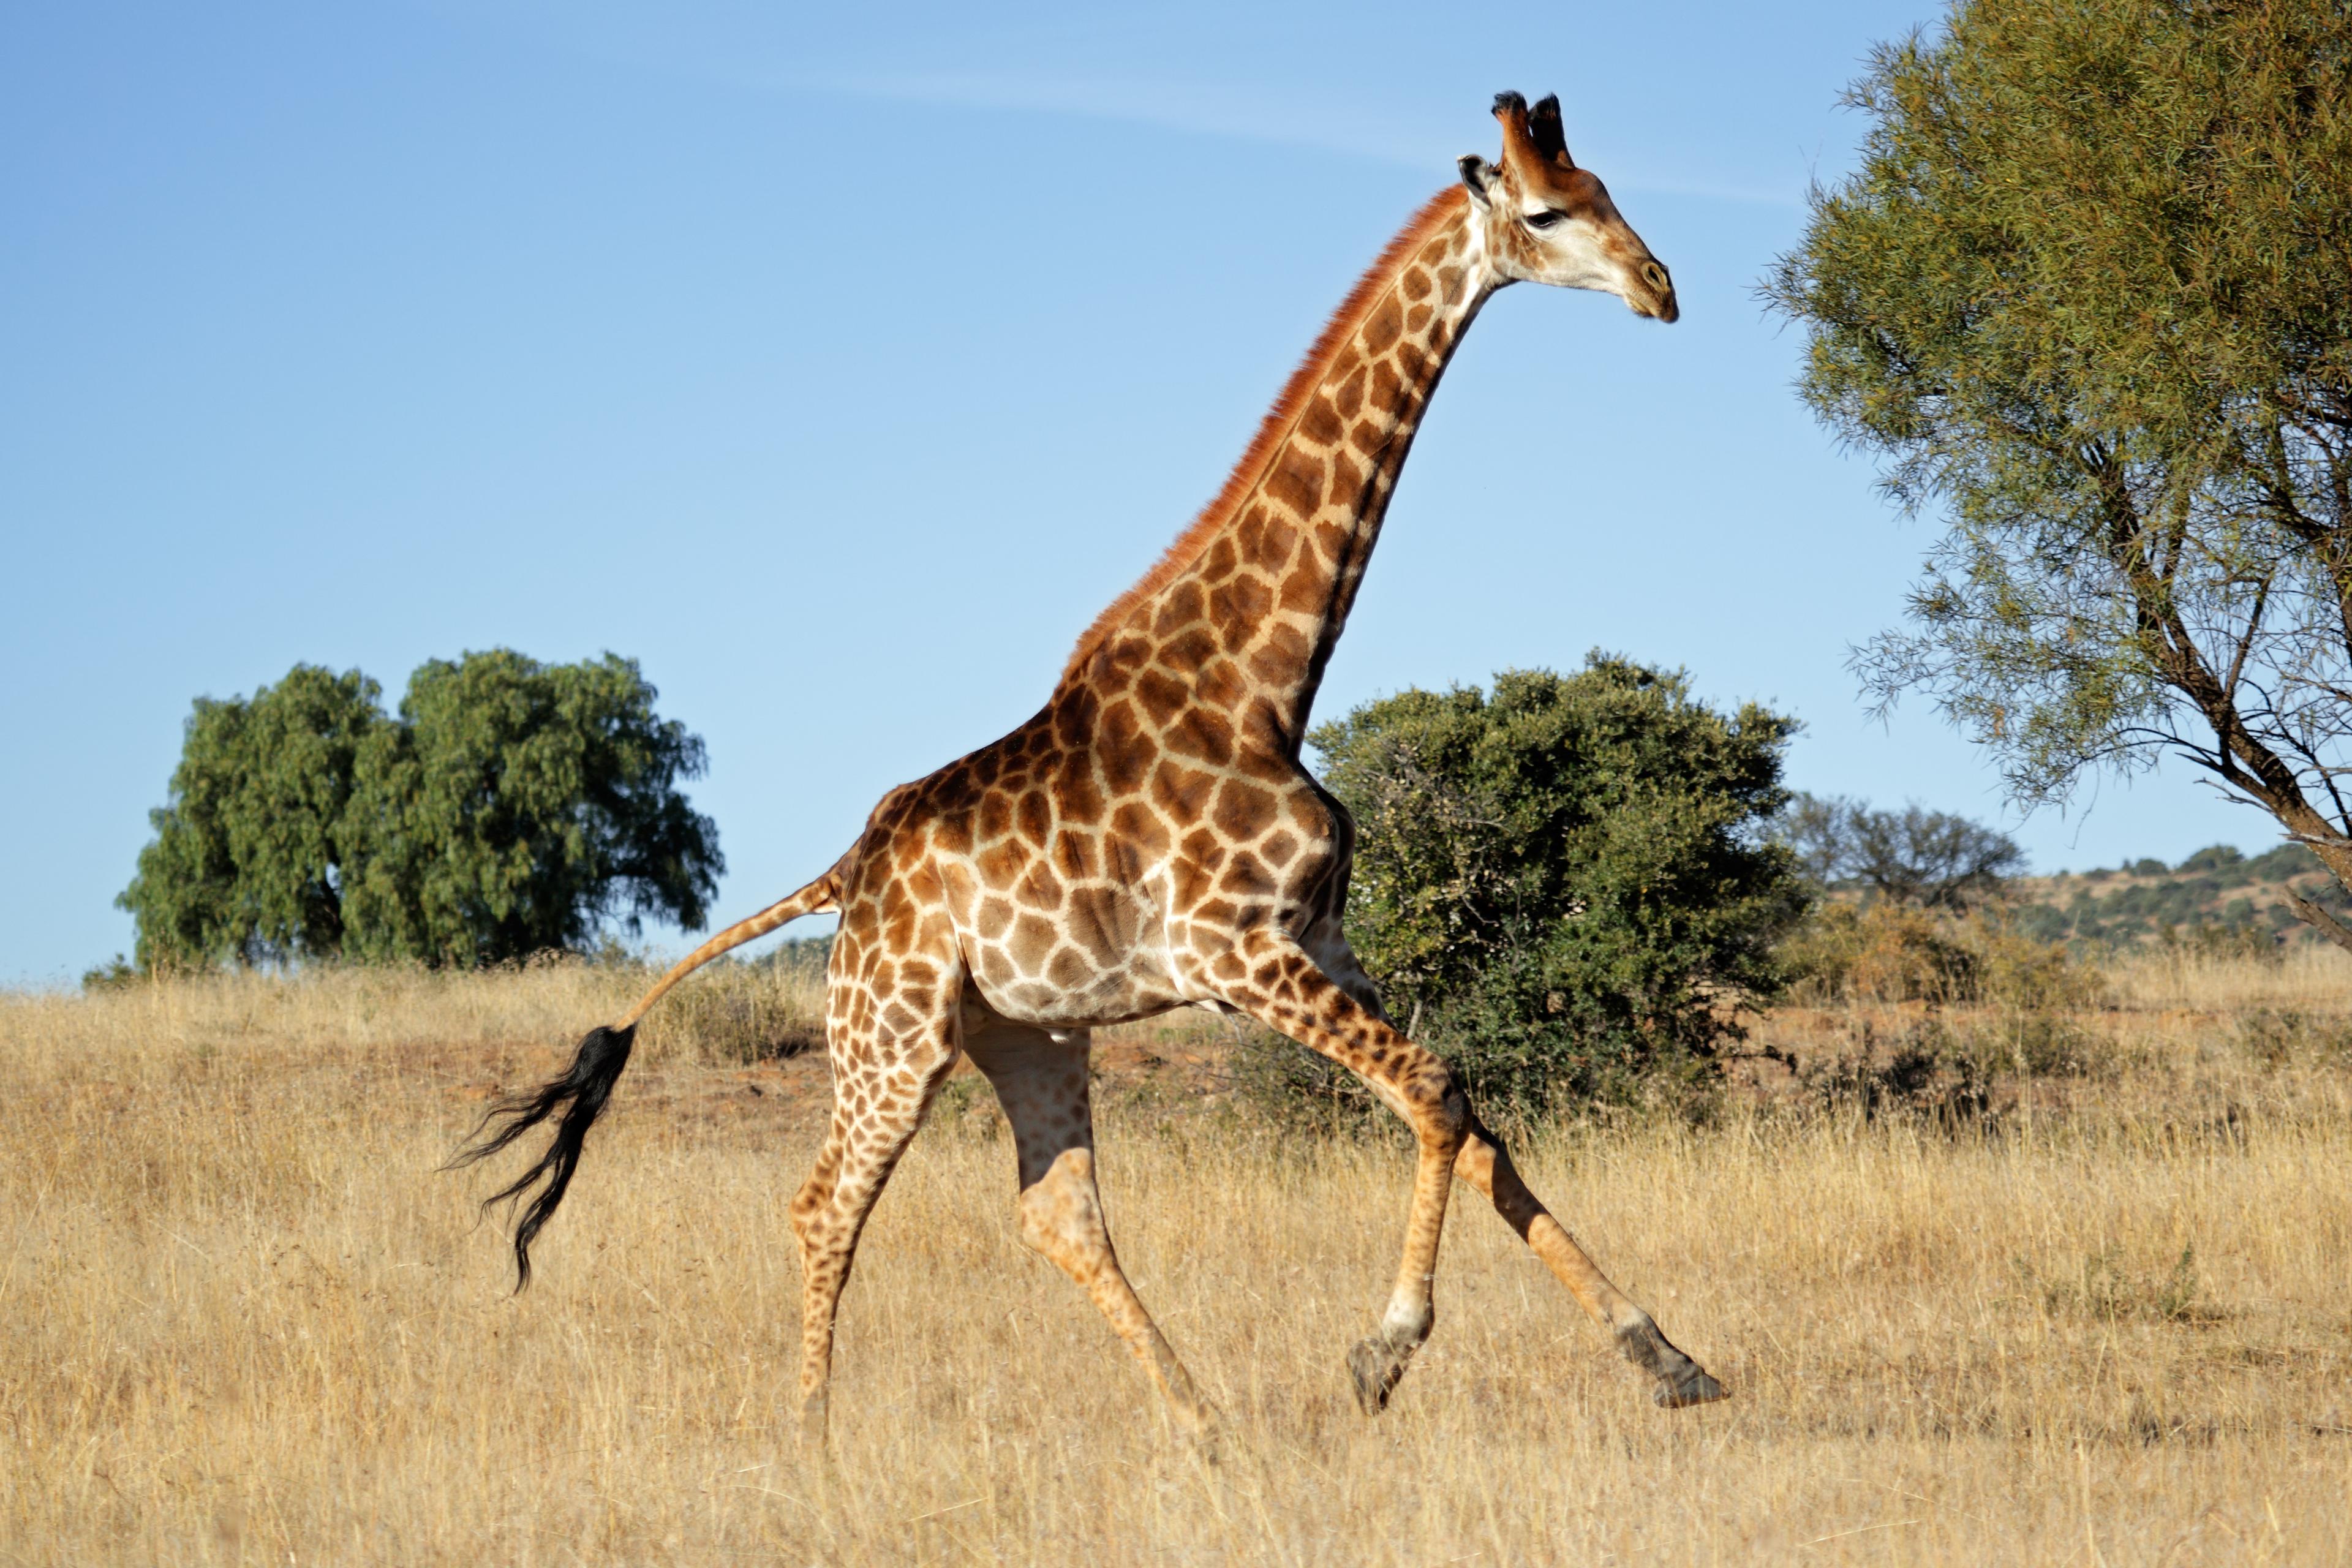 Giraffe im Lebensraum